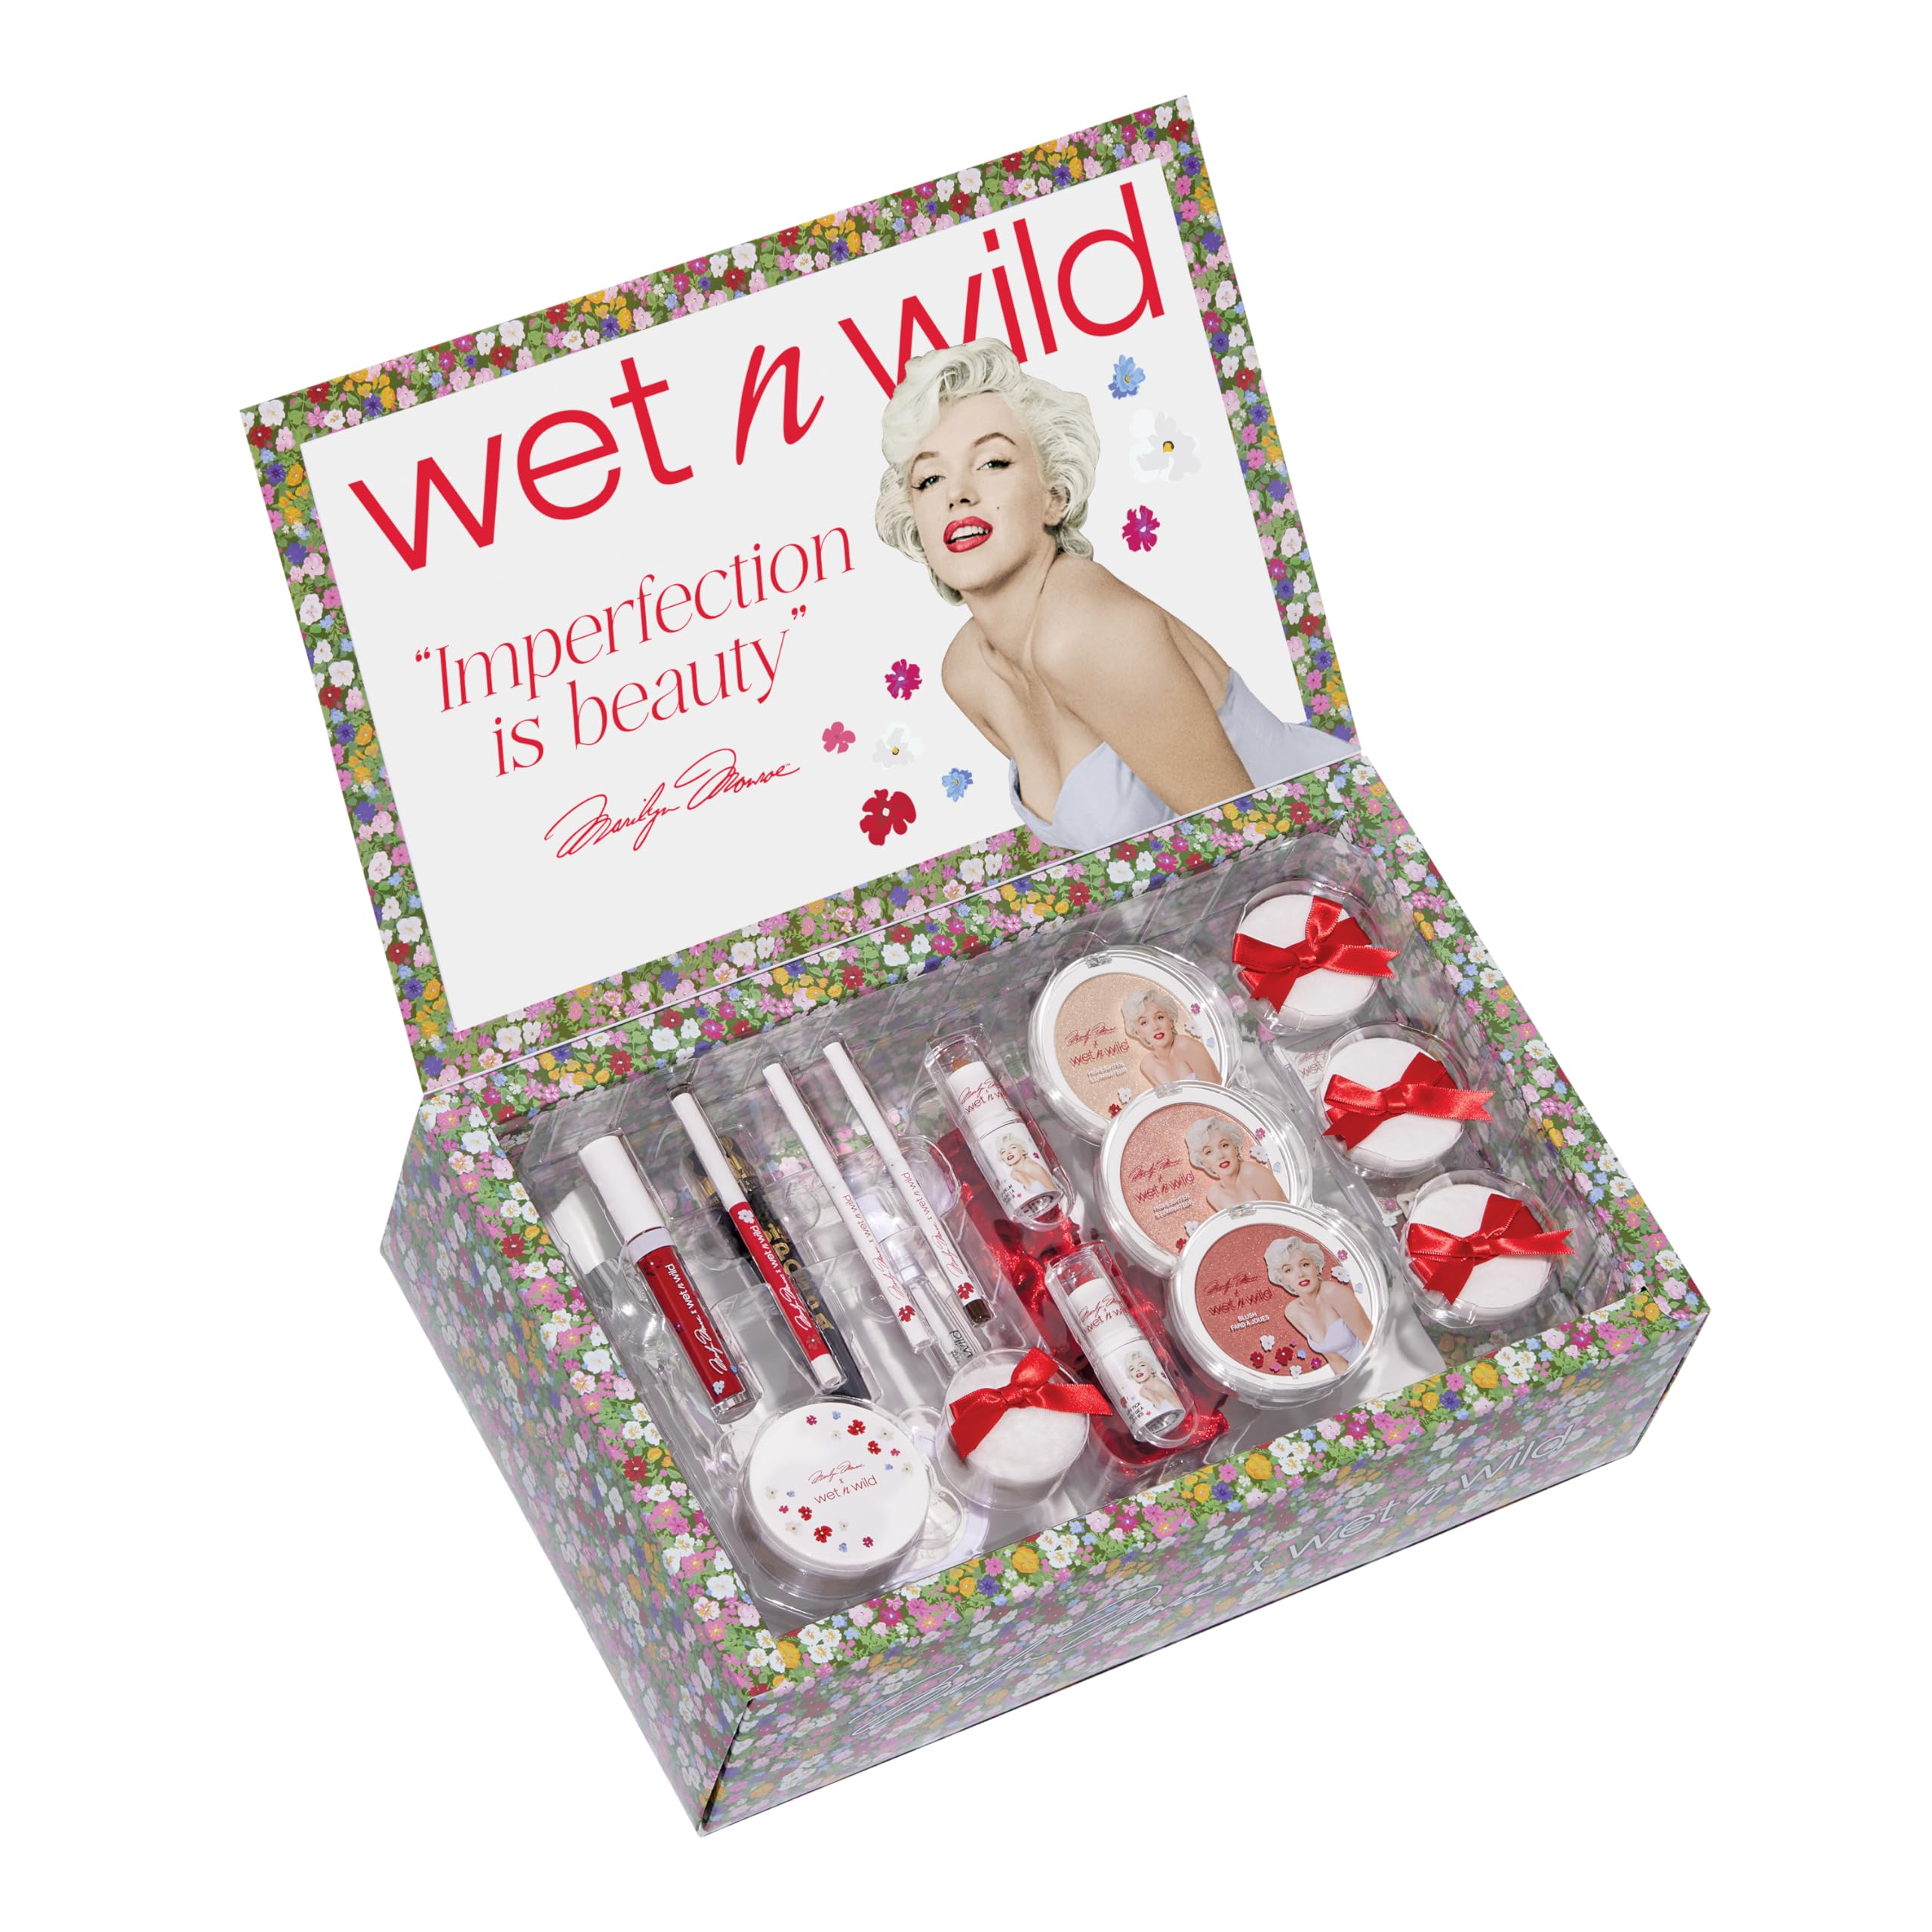 wet n wild Marilyn Monroe Collection PR Box, Exclusive Makeup Kit